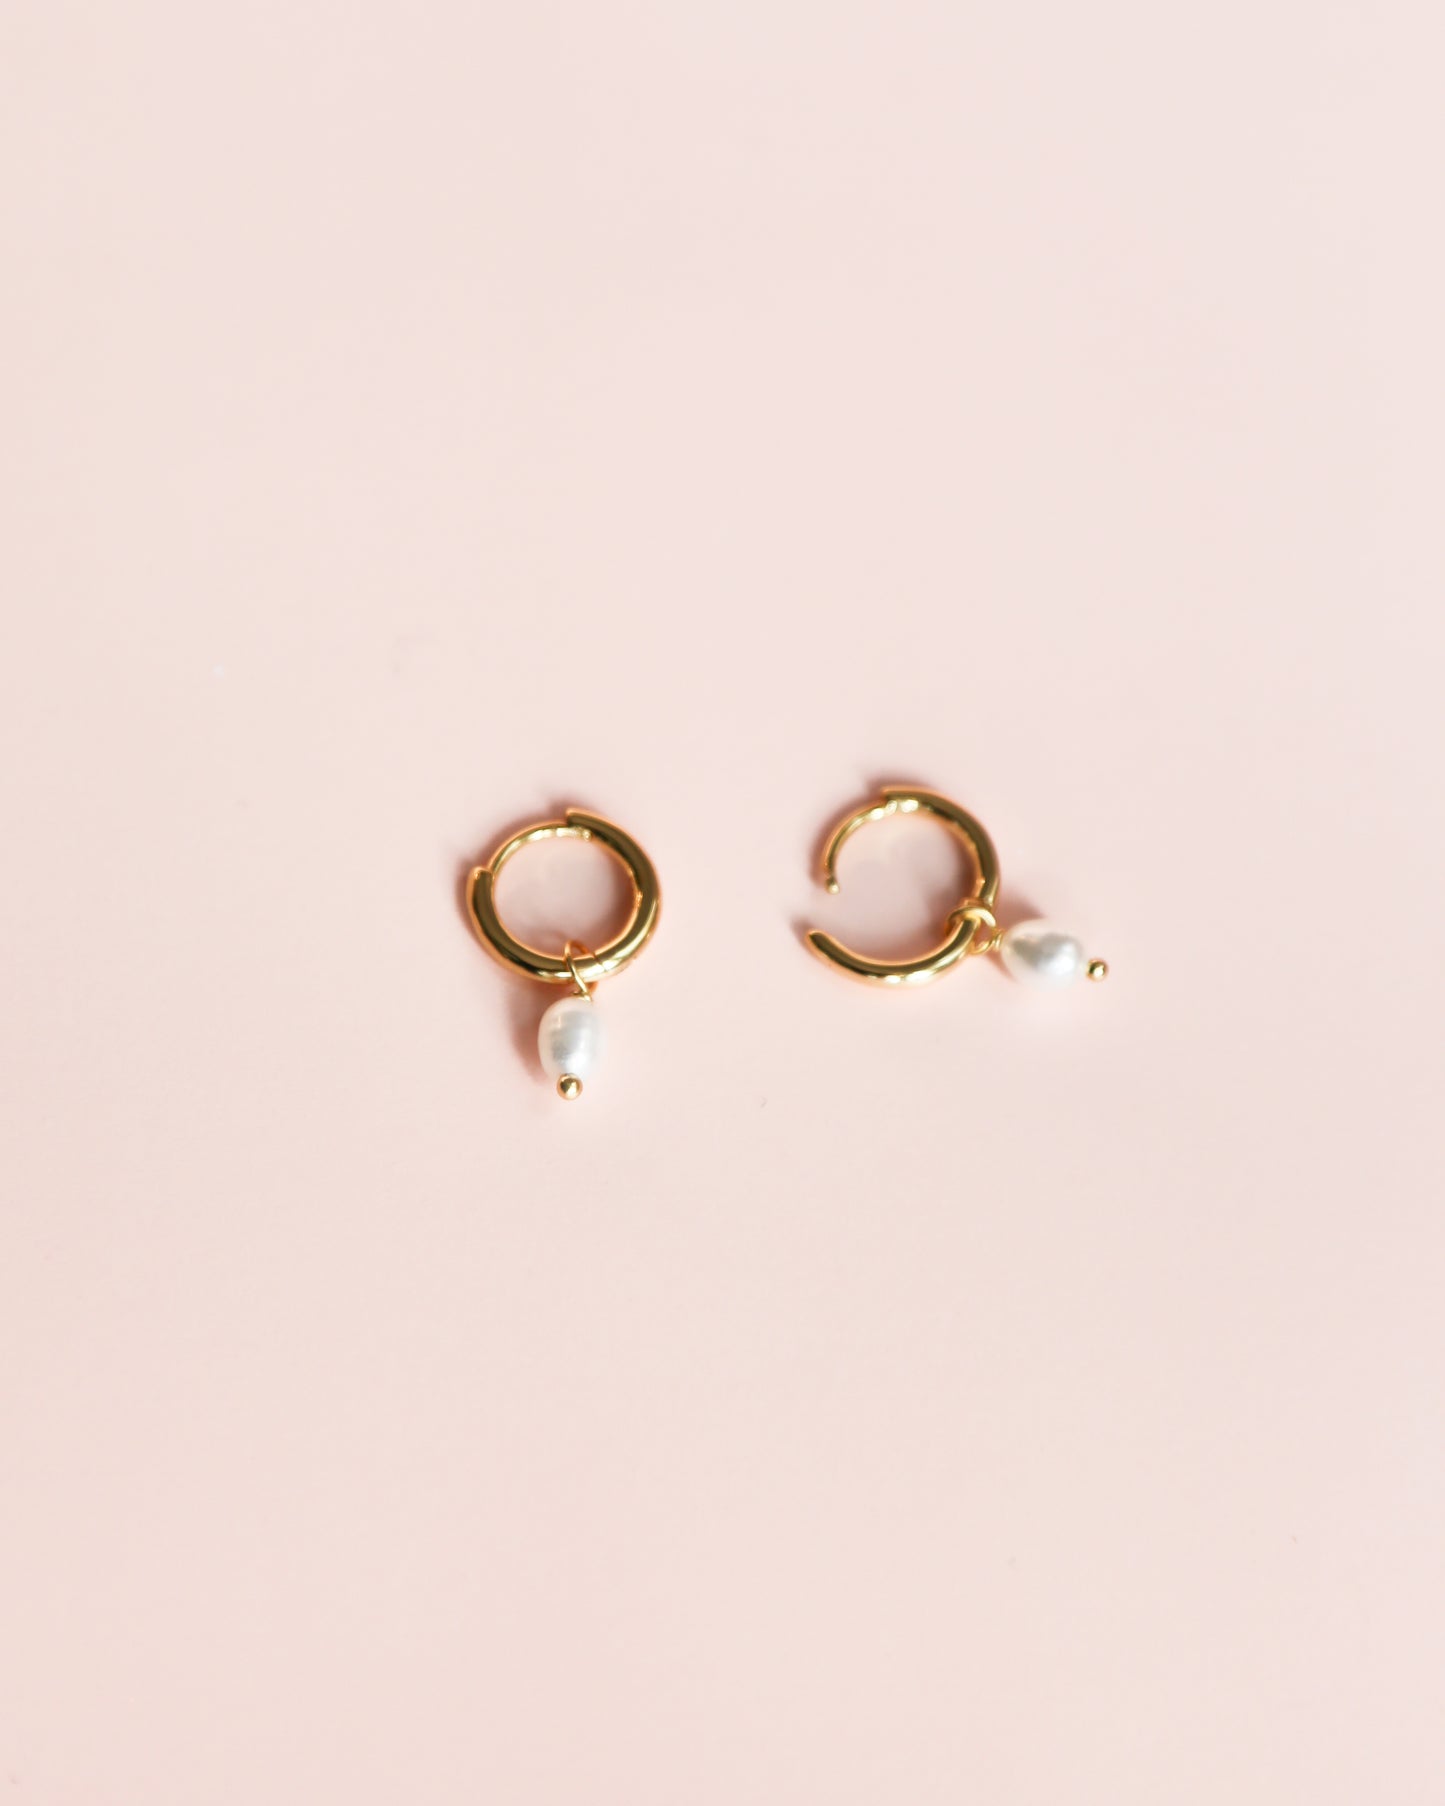 Gold hoops earrings with freshwater pearls Ollijewelry